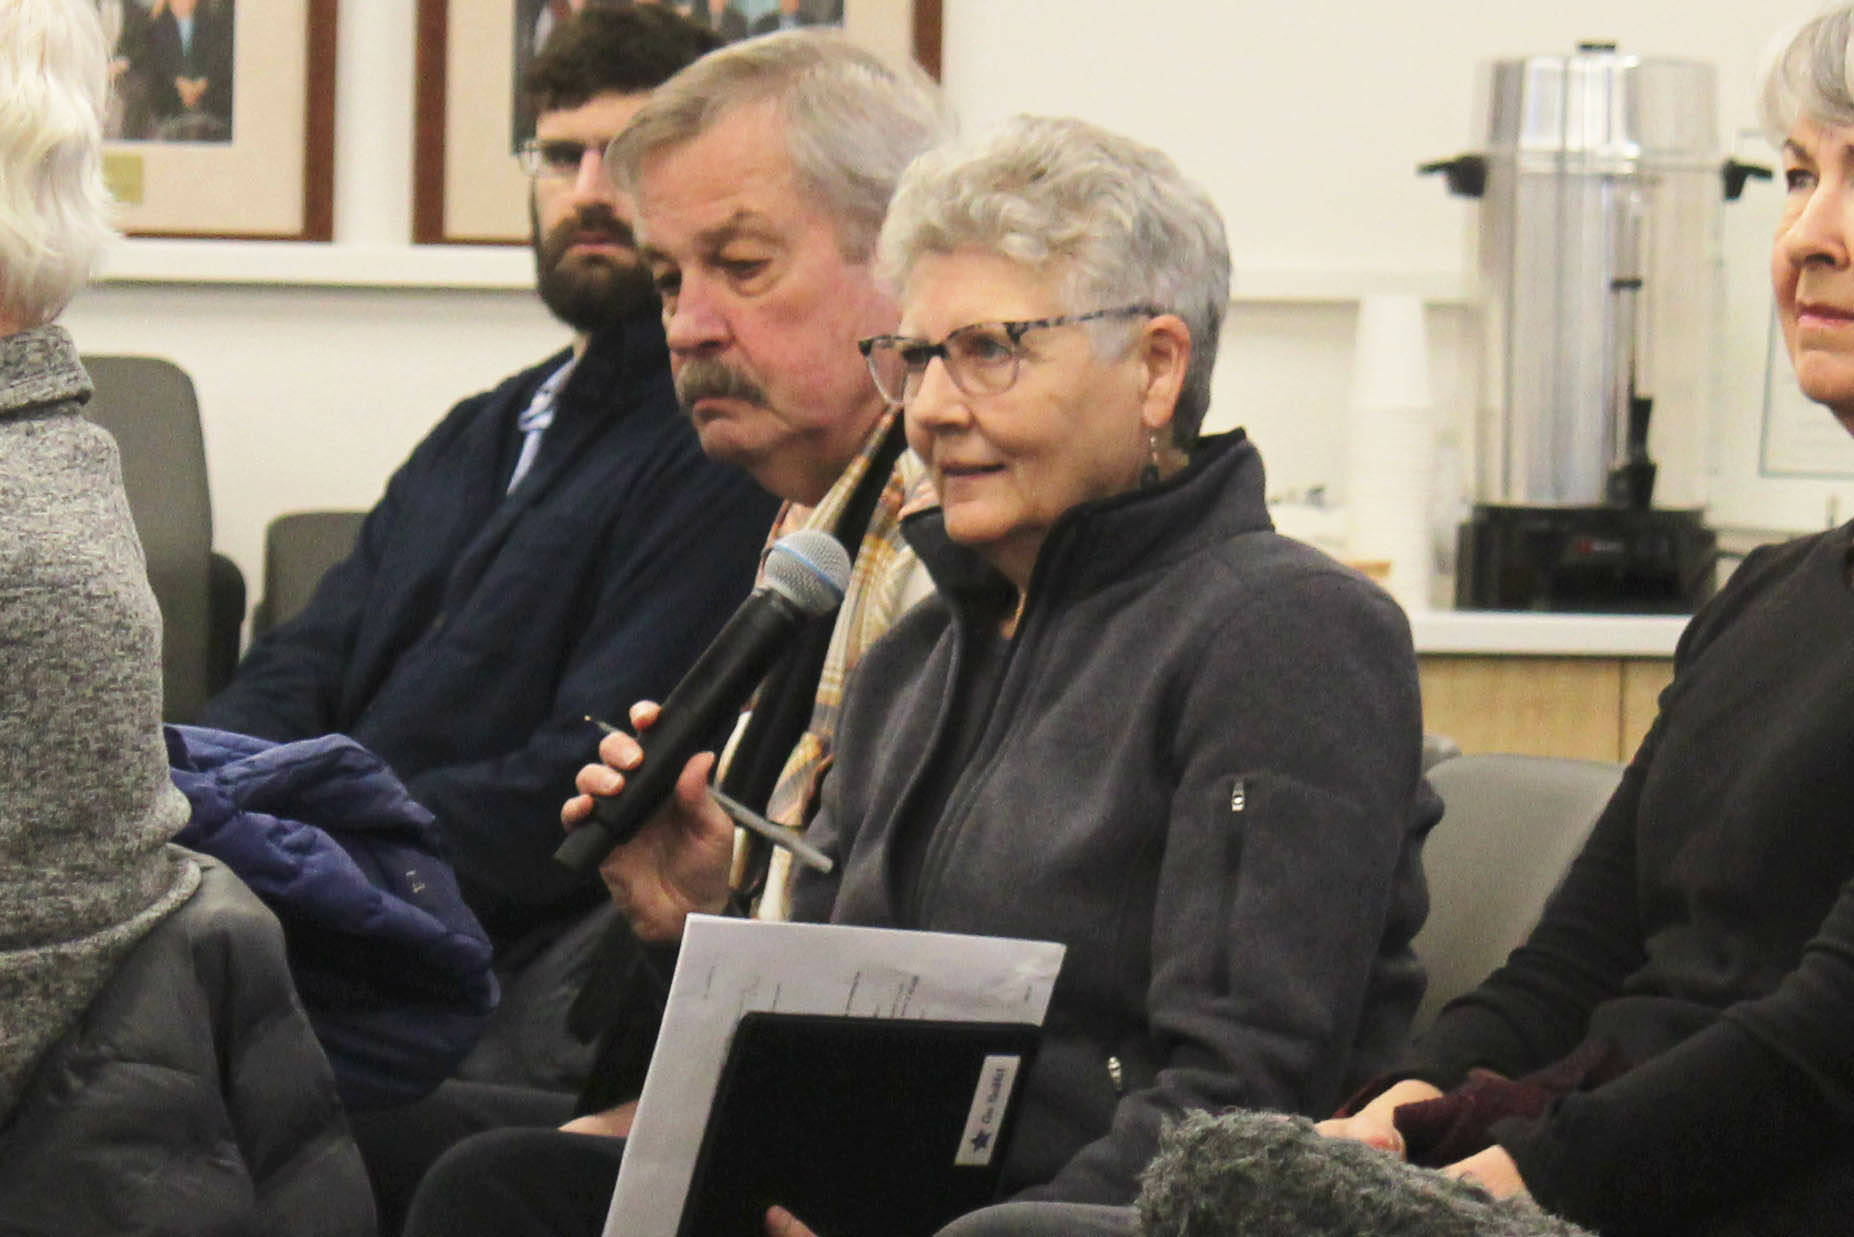 LaDawn Druce asks Sen. Jesse Bjorkman a question during a town hall event on Saturday, Feb. 25, 2023 in Soldotna, Alaska. (Ashlyn O’Hara/Peninsula Clarion)